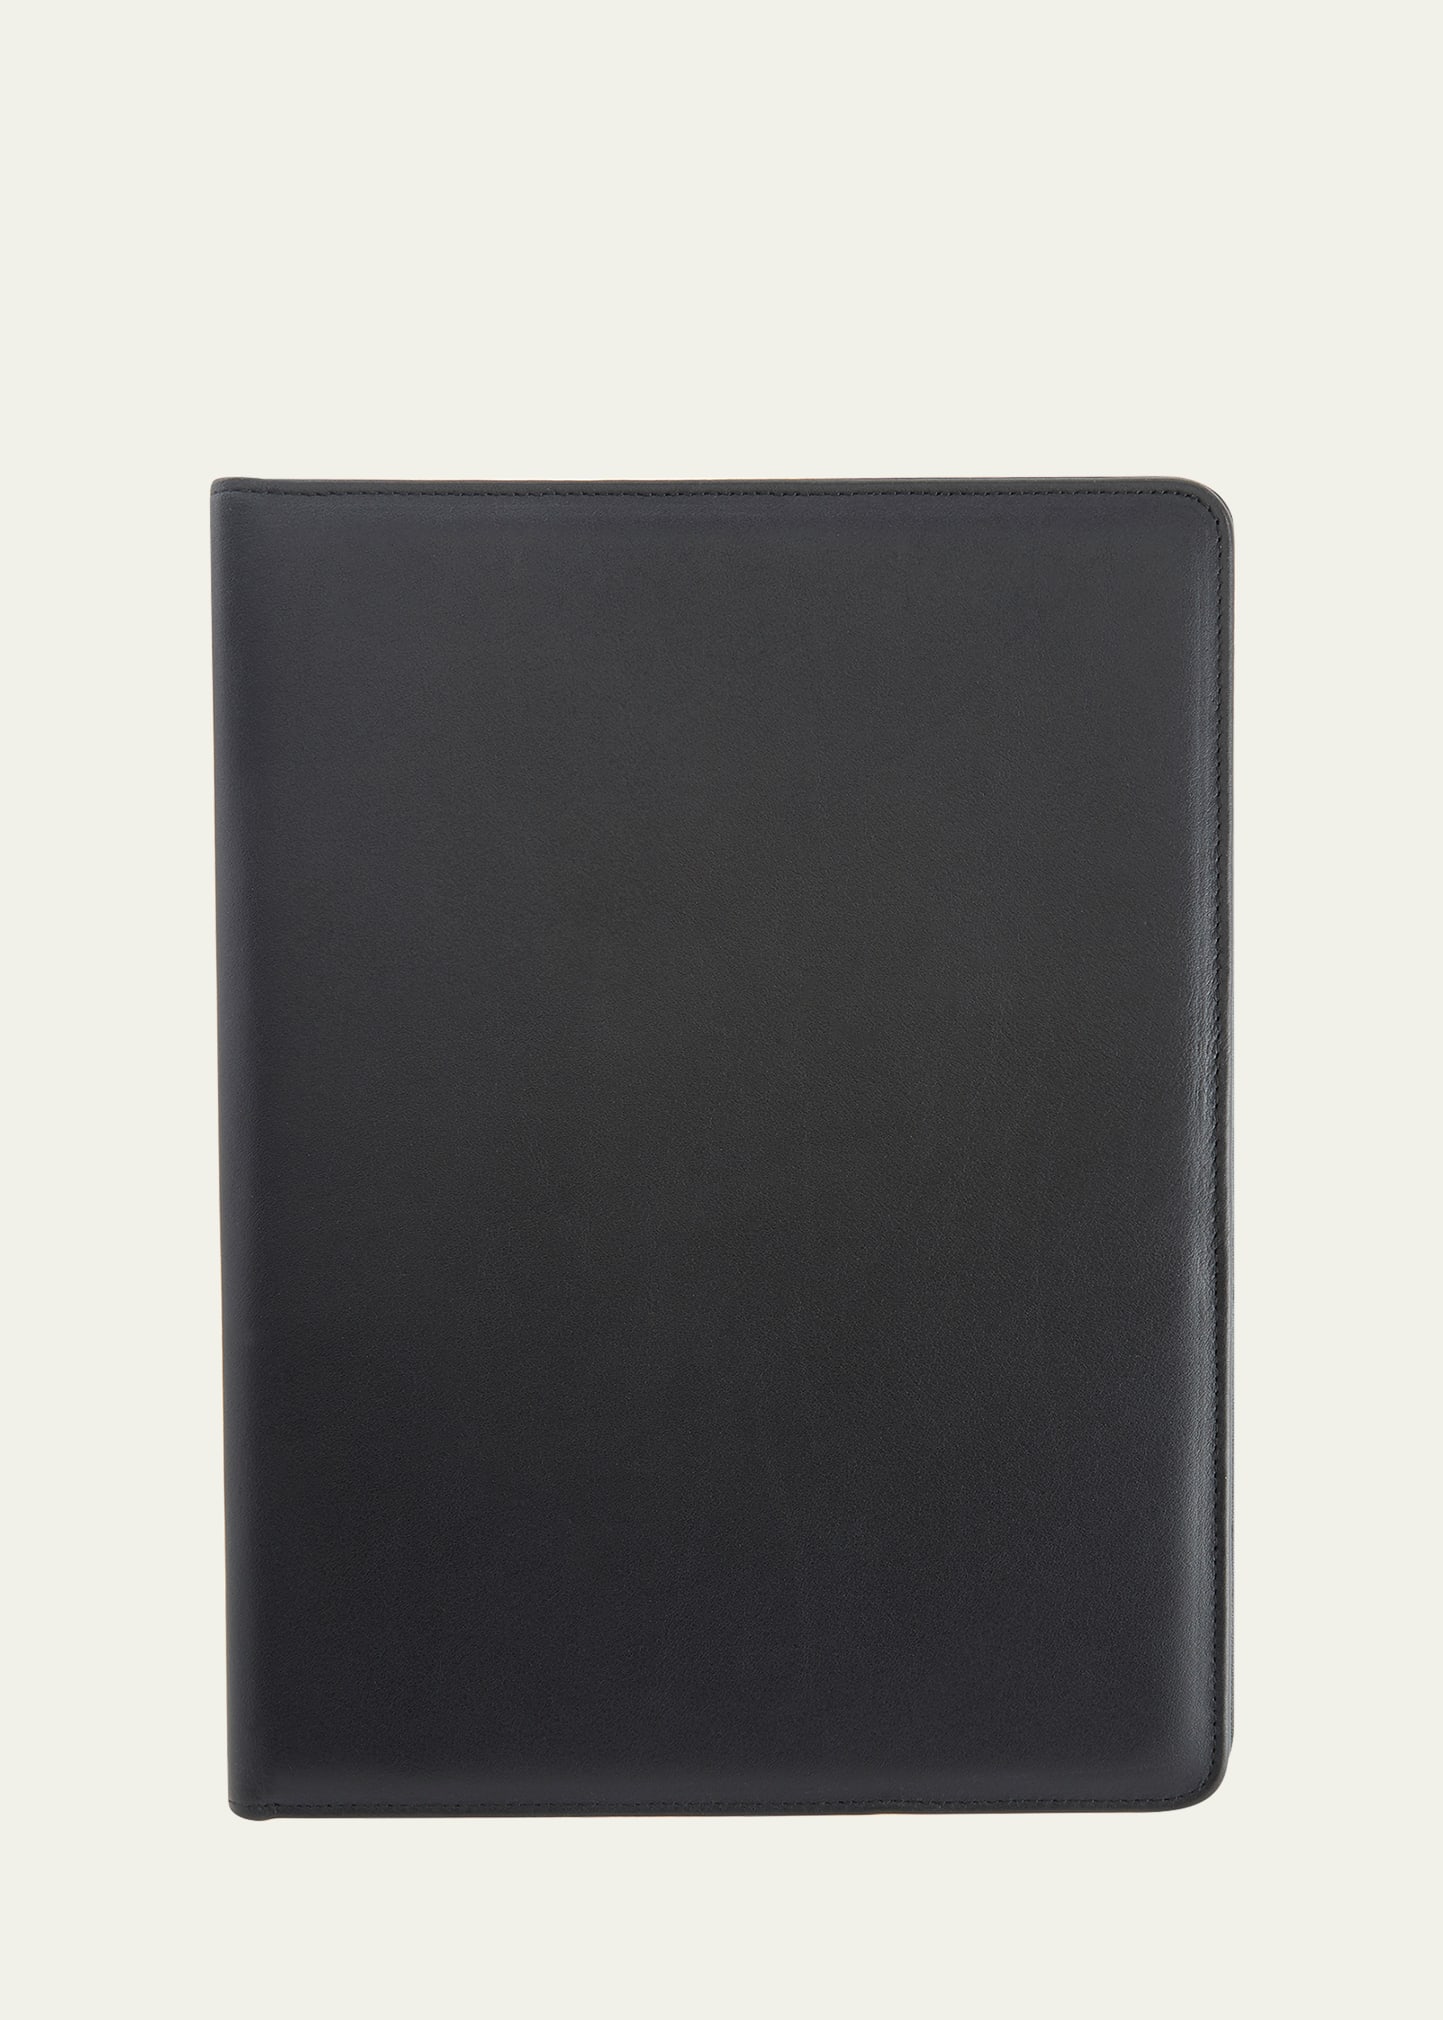 Royce New York Personalized Executive Leather Document Organizer Folder In Black